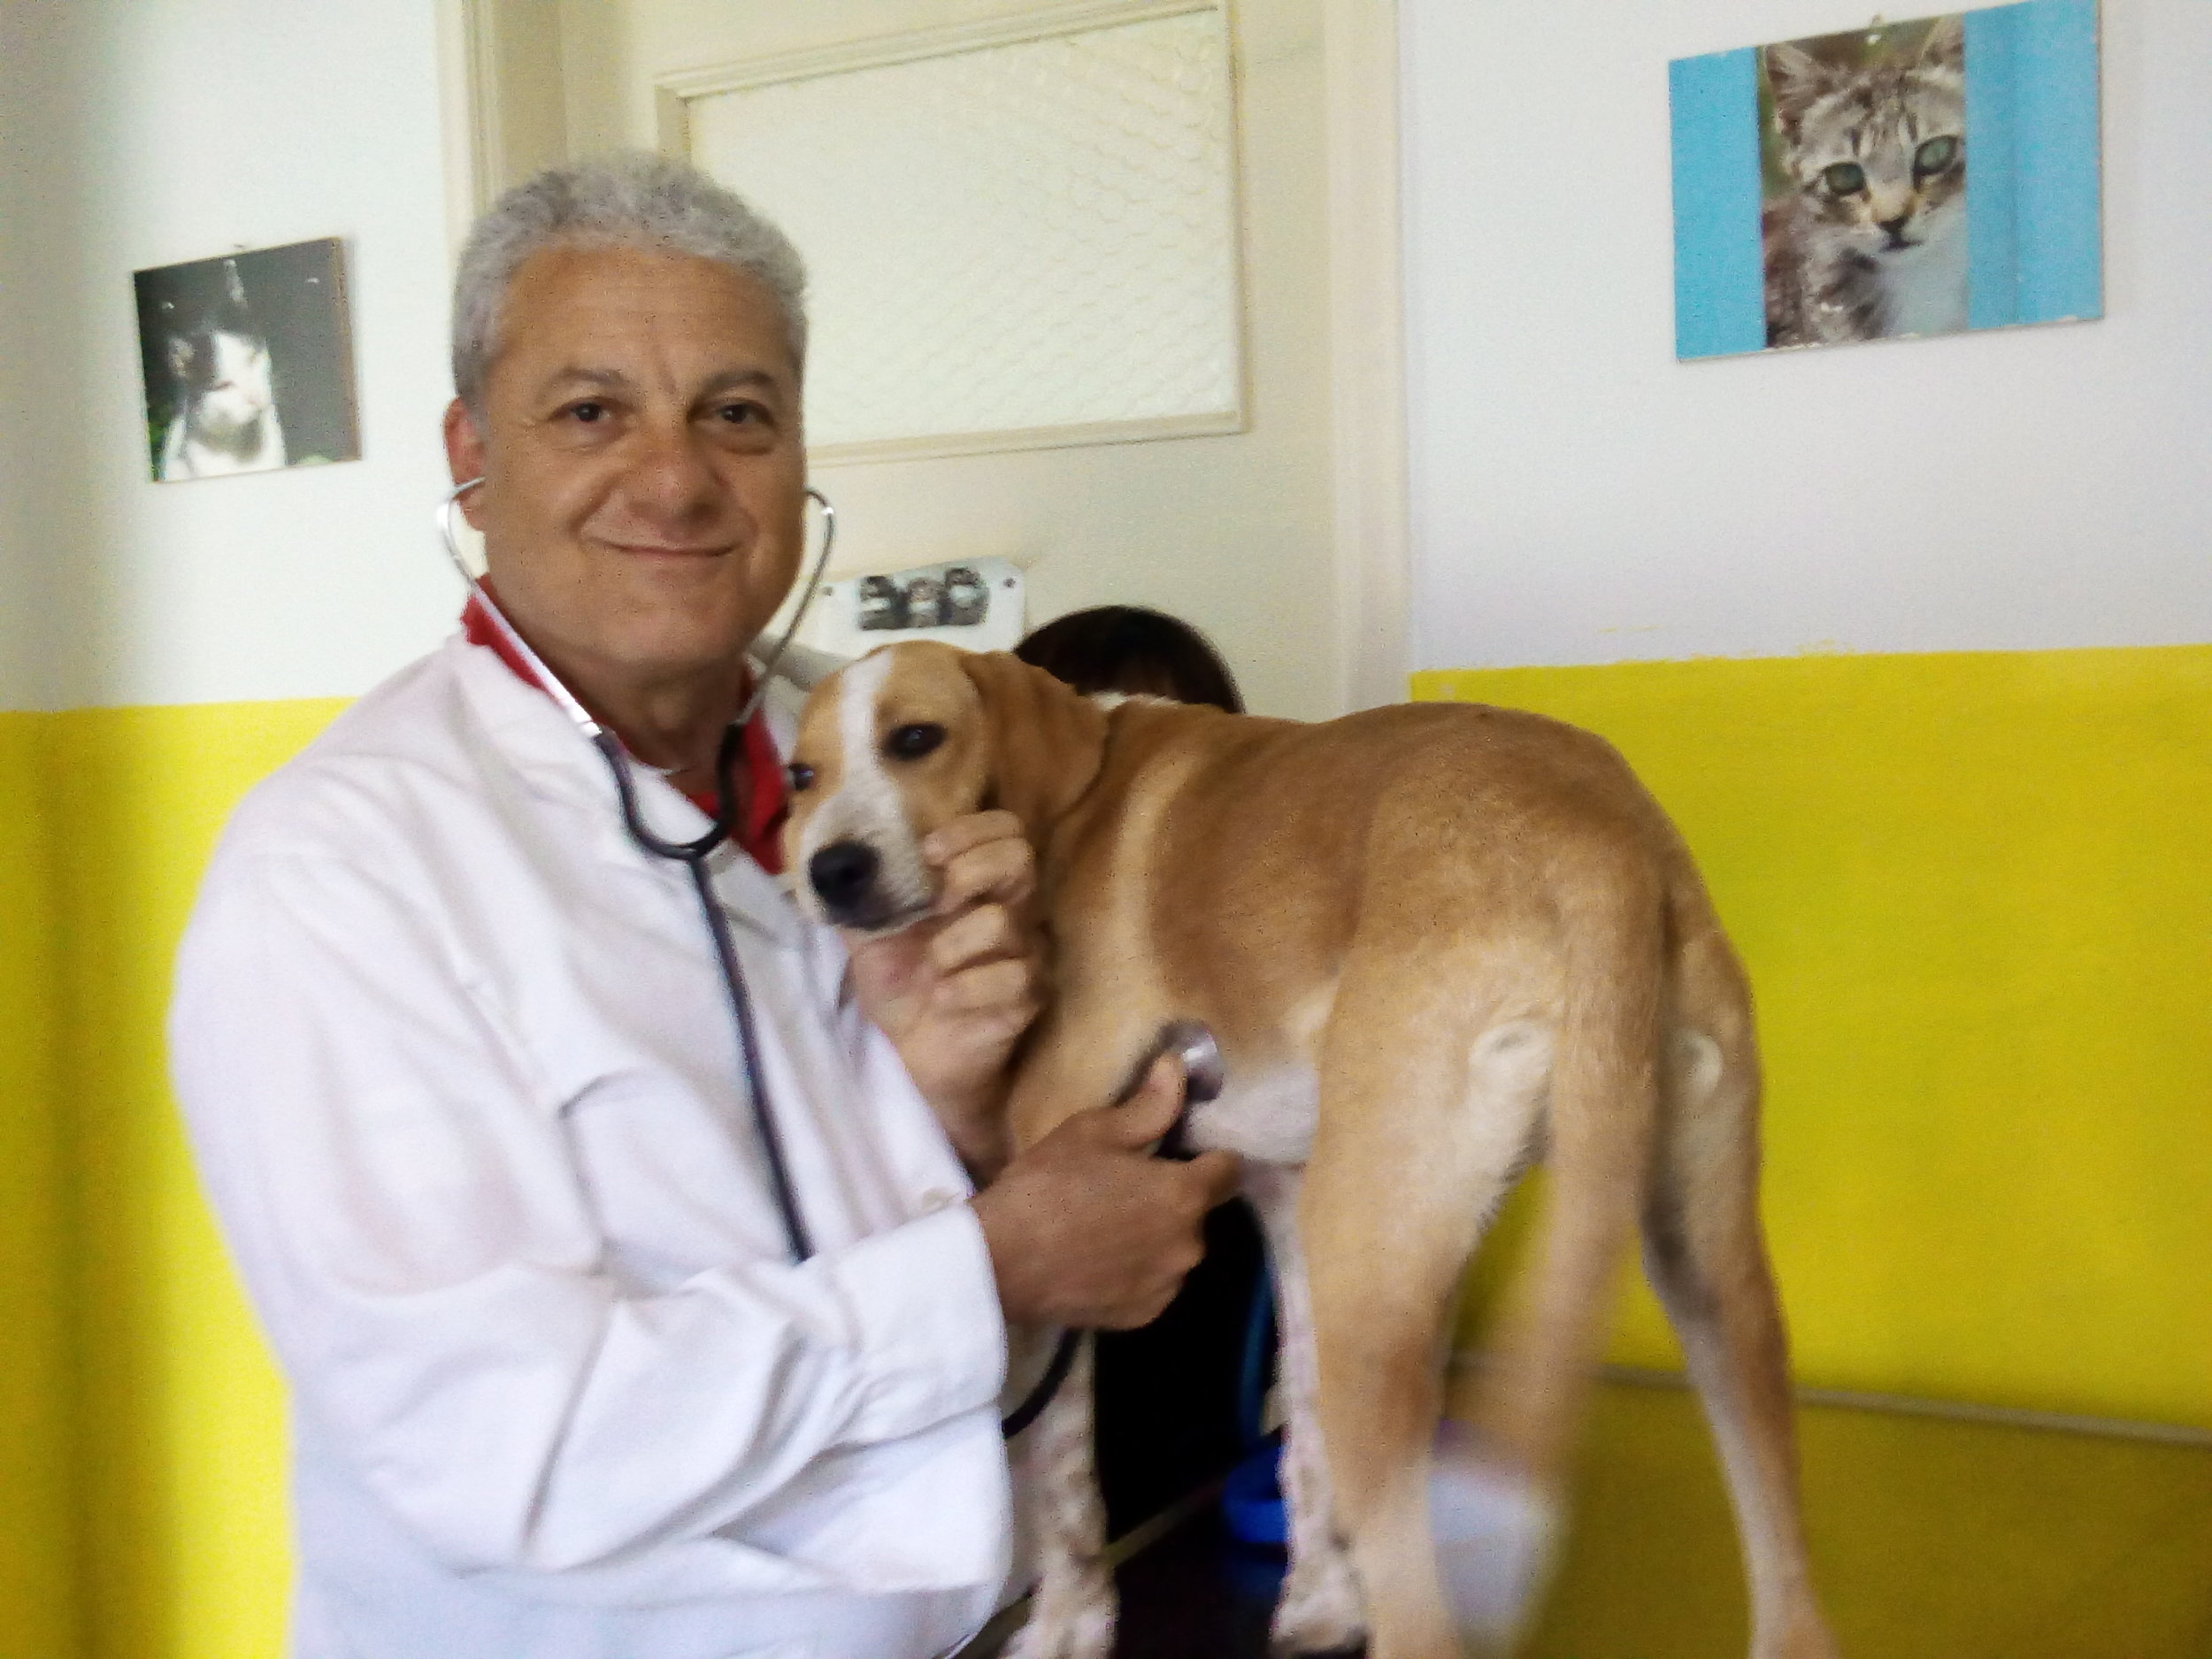 Dr. Vasalakis examines puppy Berto